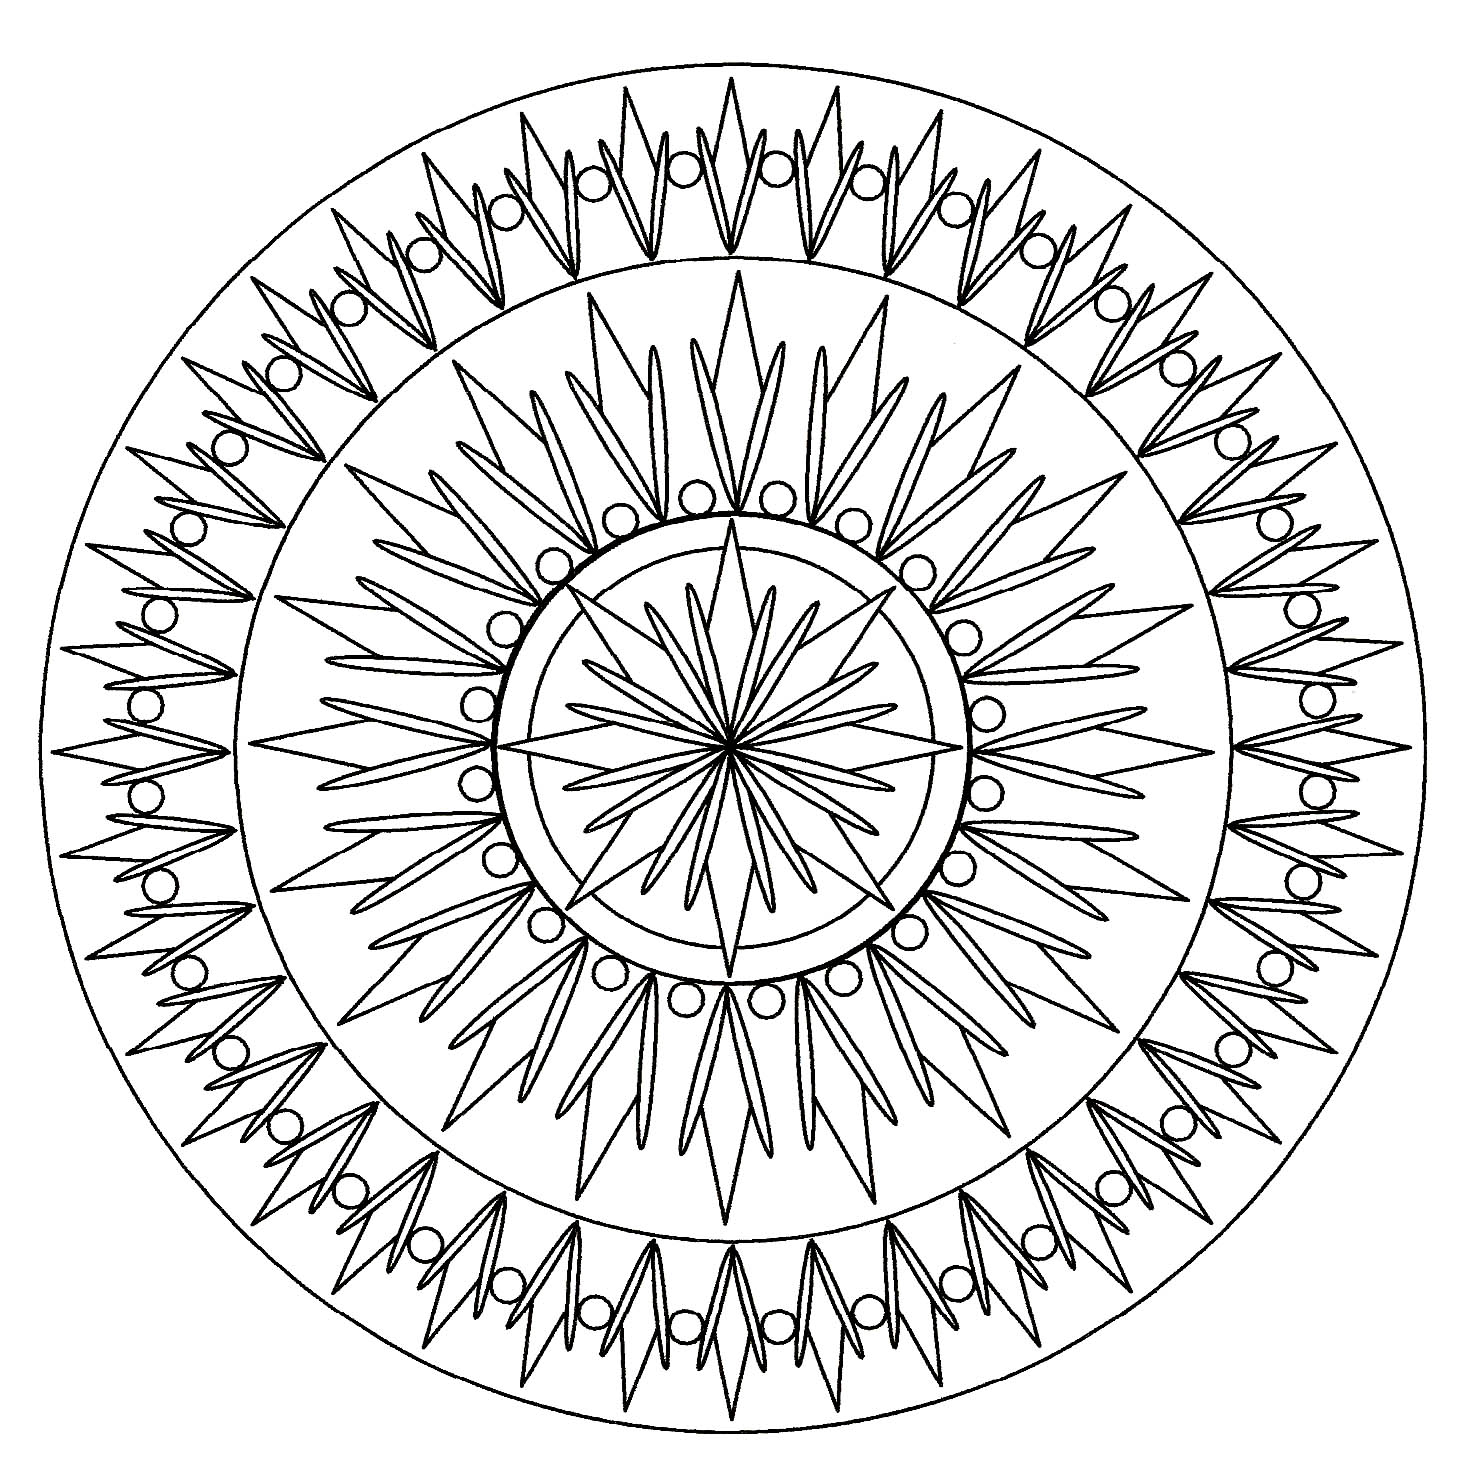 Mandala Facile 2 - Mandalas - Coloriages Difficiles Pour avec Coloriage De Mandala Difficile A Imprimer